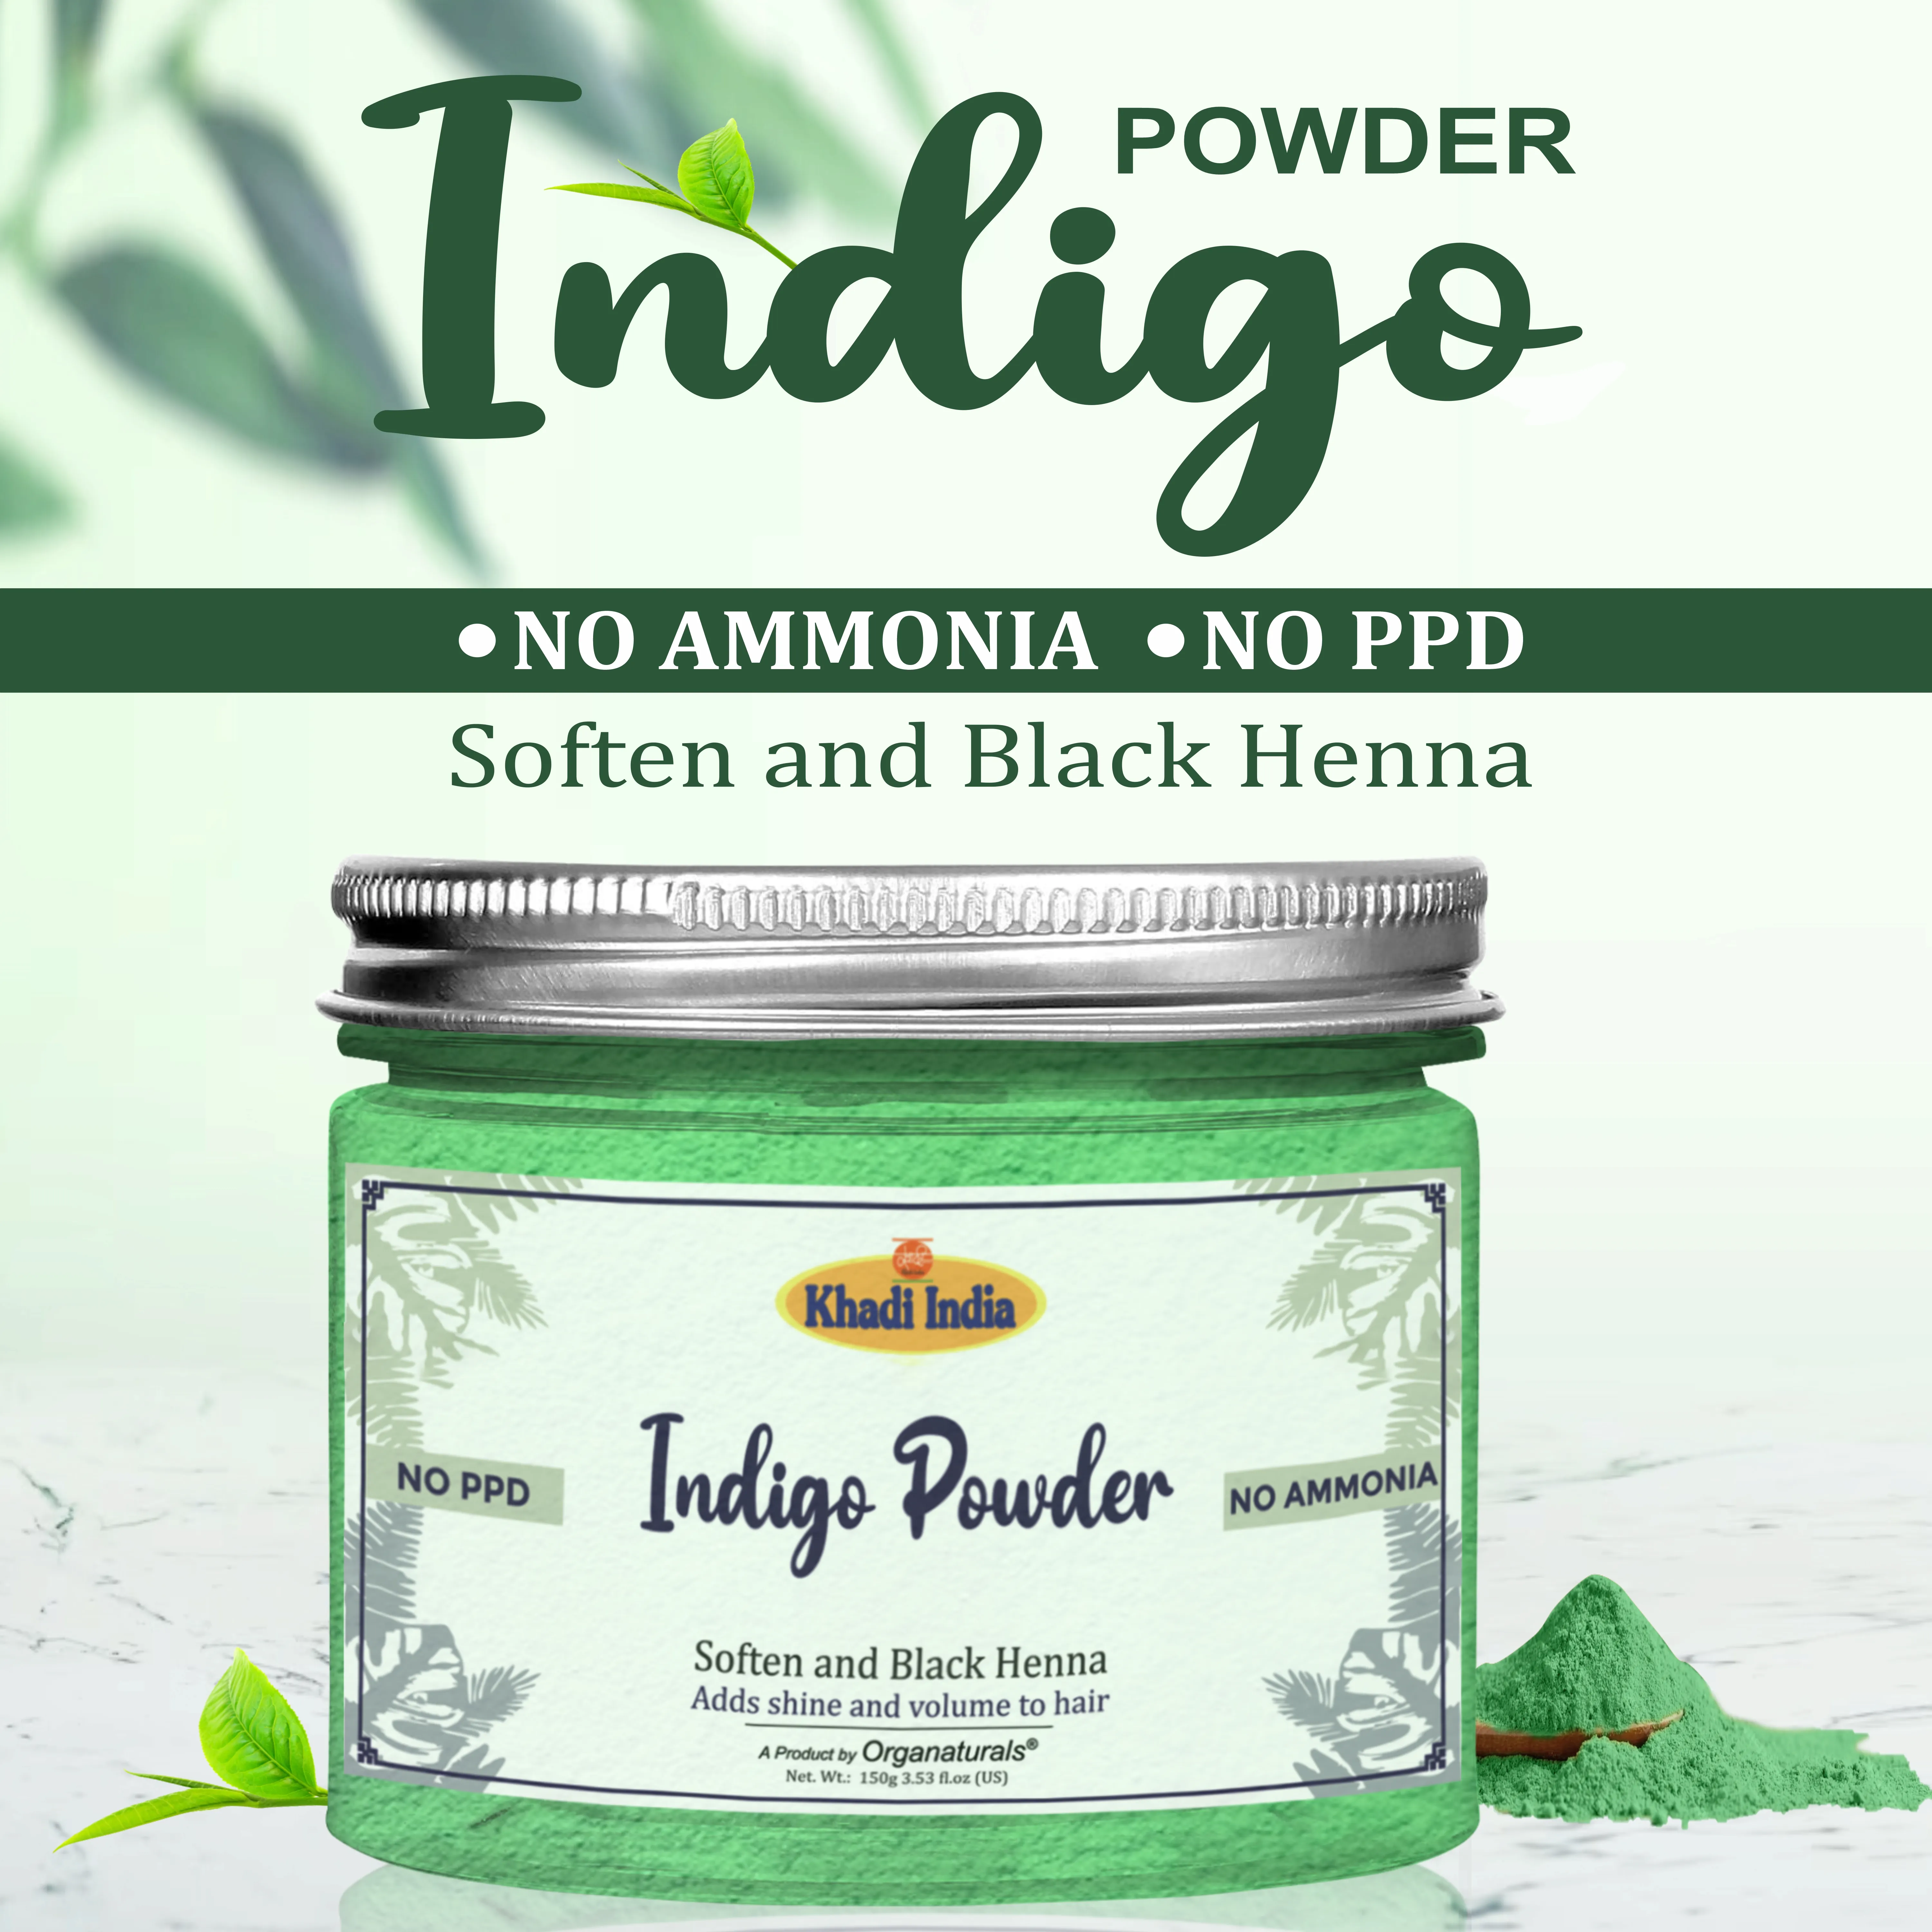 Indigo powder banner for mobile - www.dkihenna.com